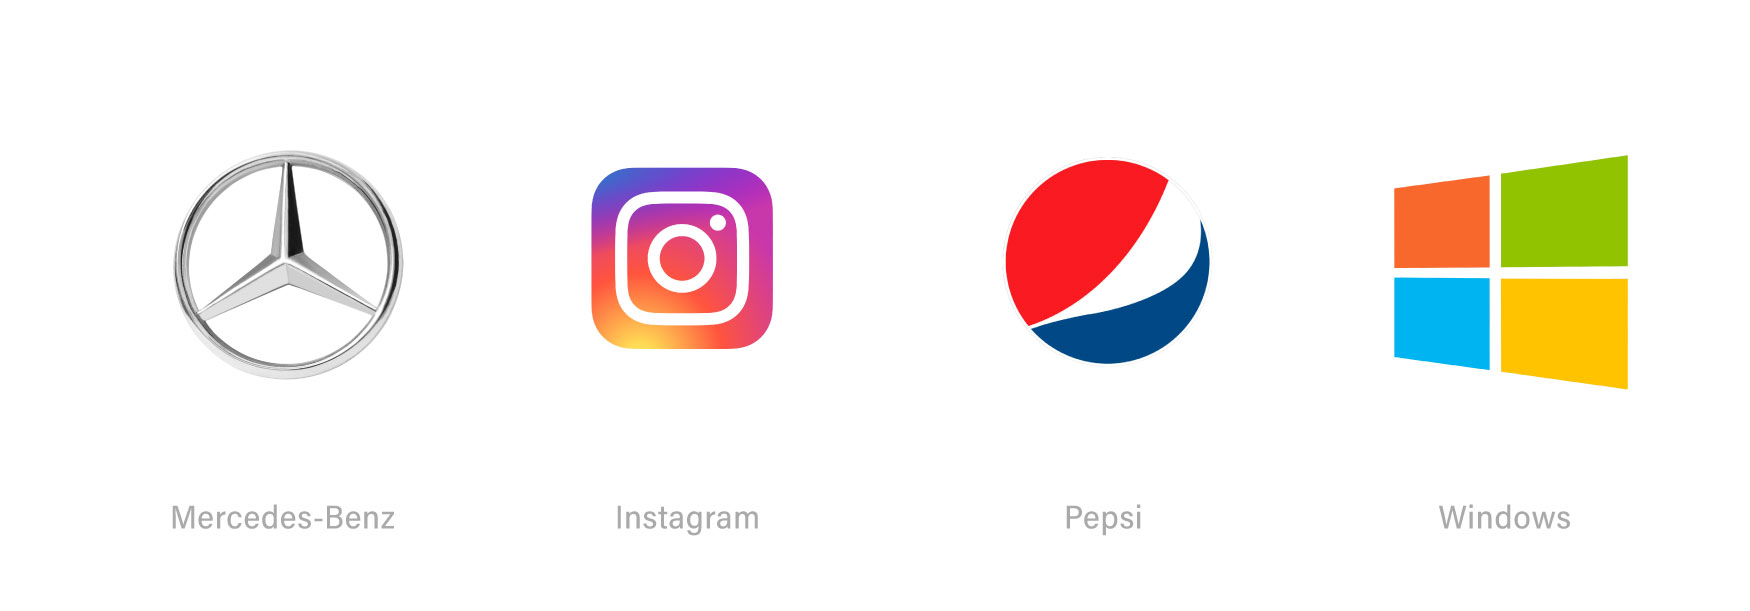 Popular brand icons